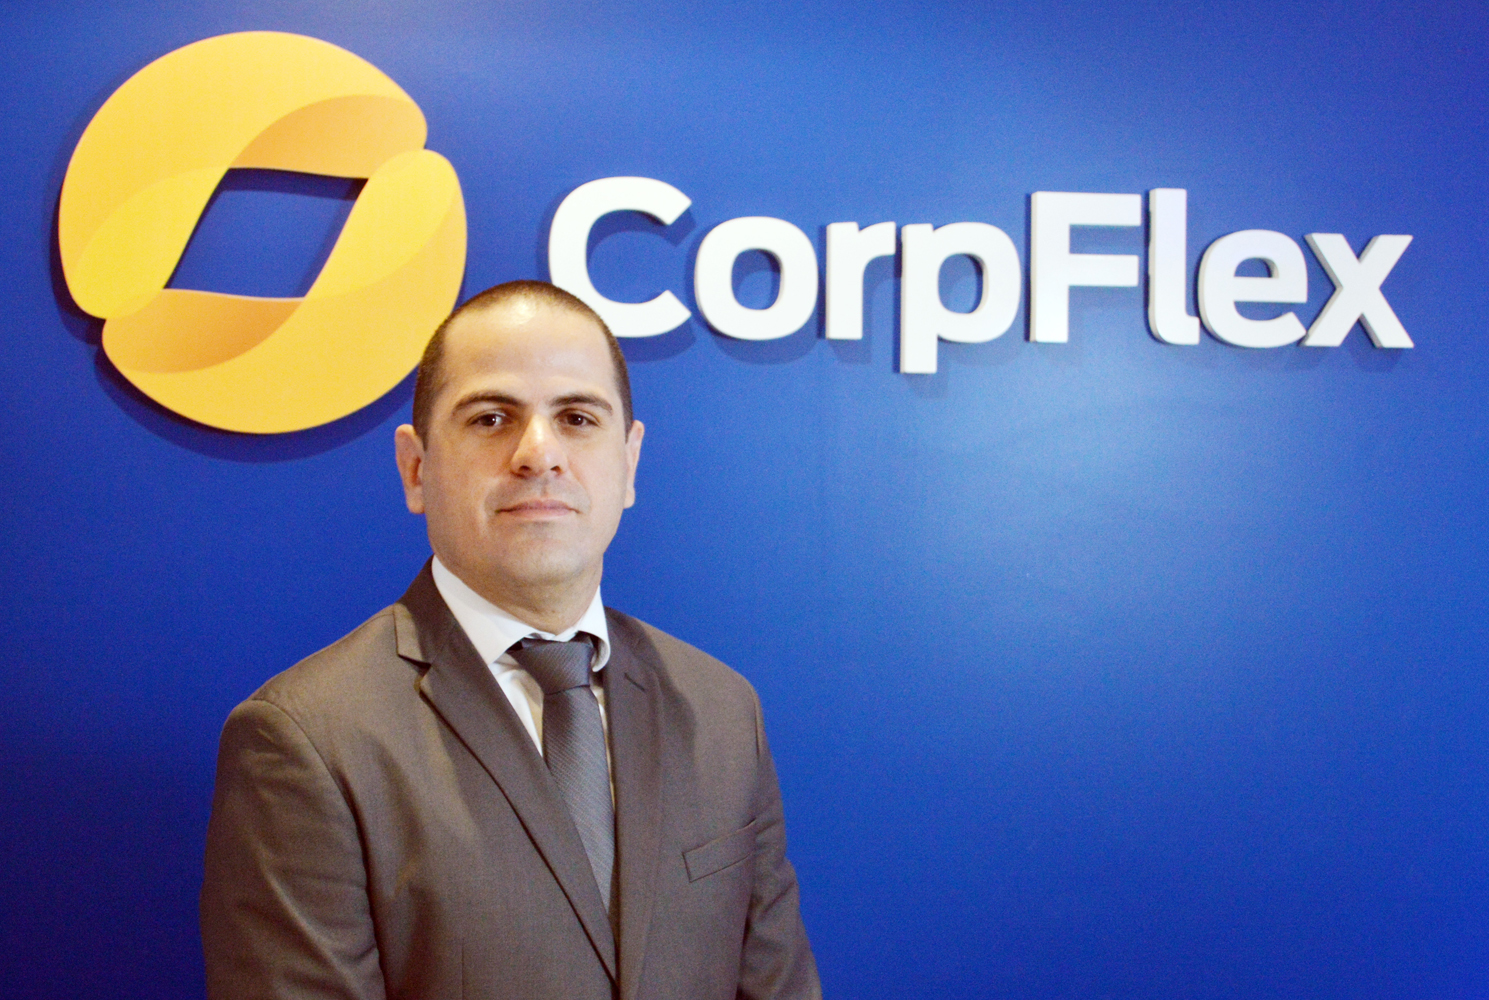 CorpFlex nomeia Diogo Barroso como novo CTO da companhia